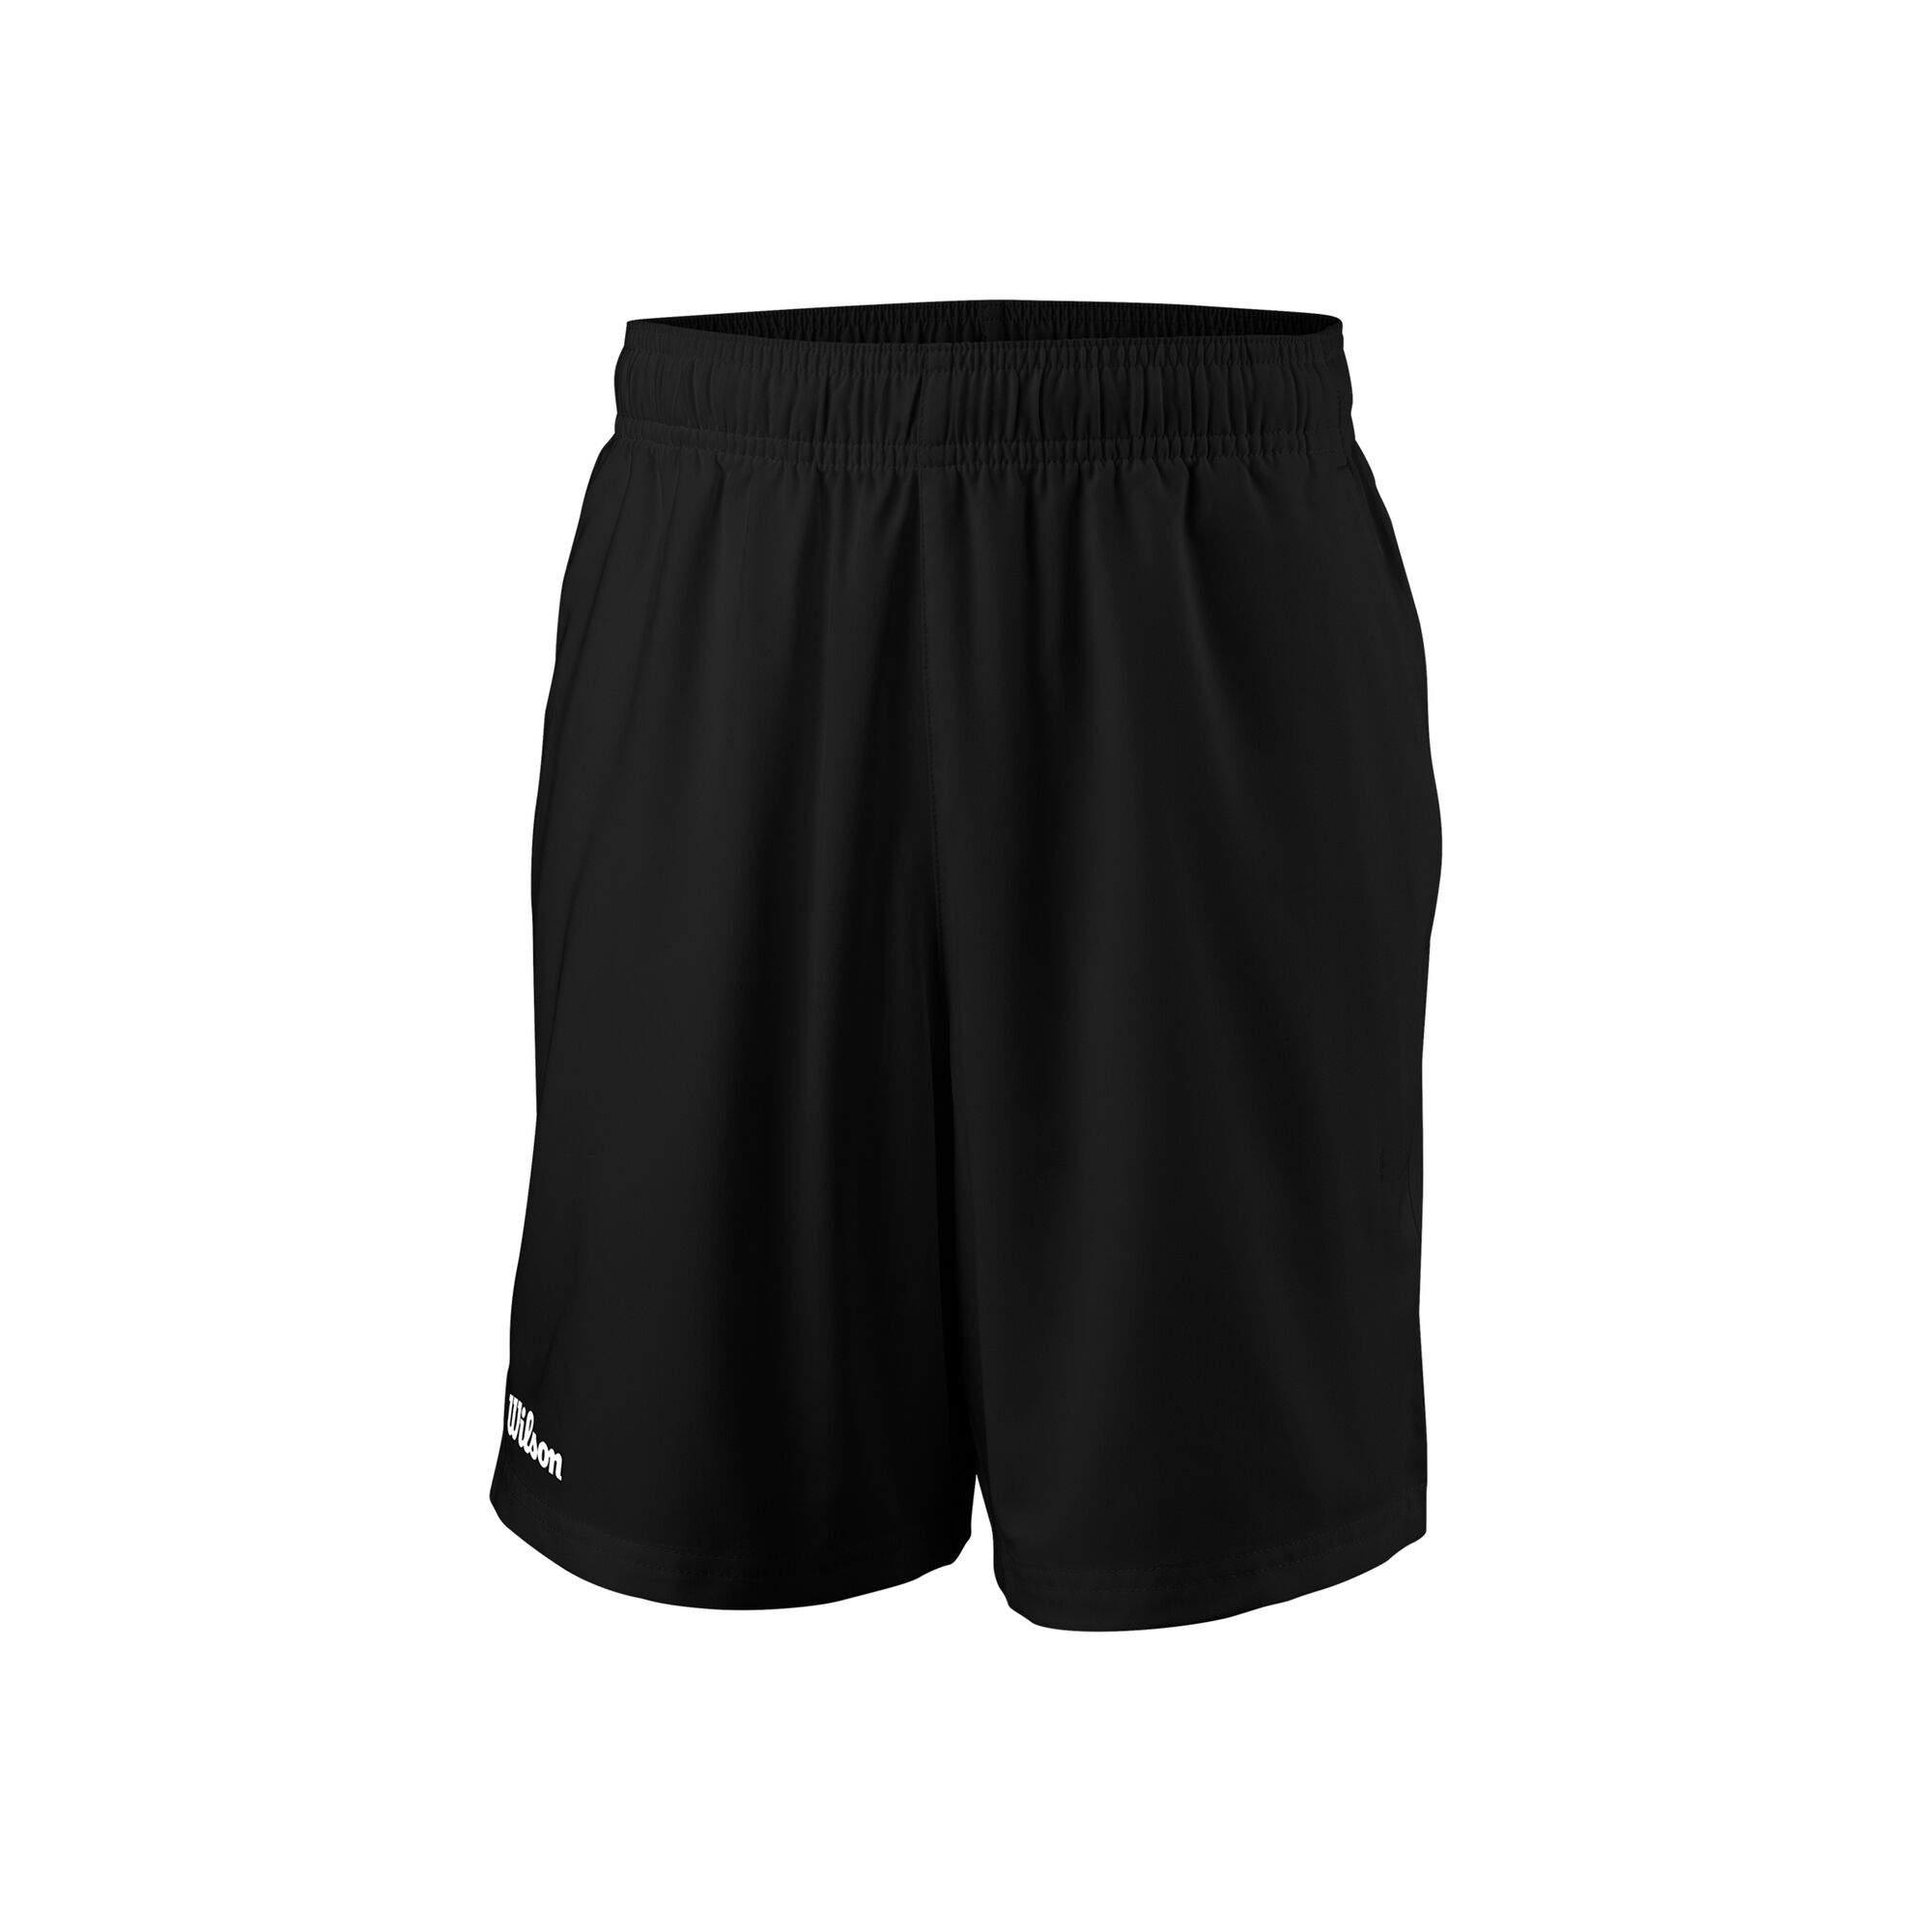 Buy Wilson Team Shorts Boys Black online | Tennis Point COM